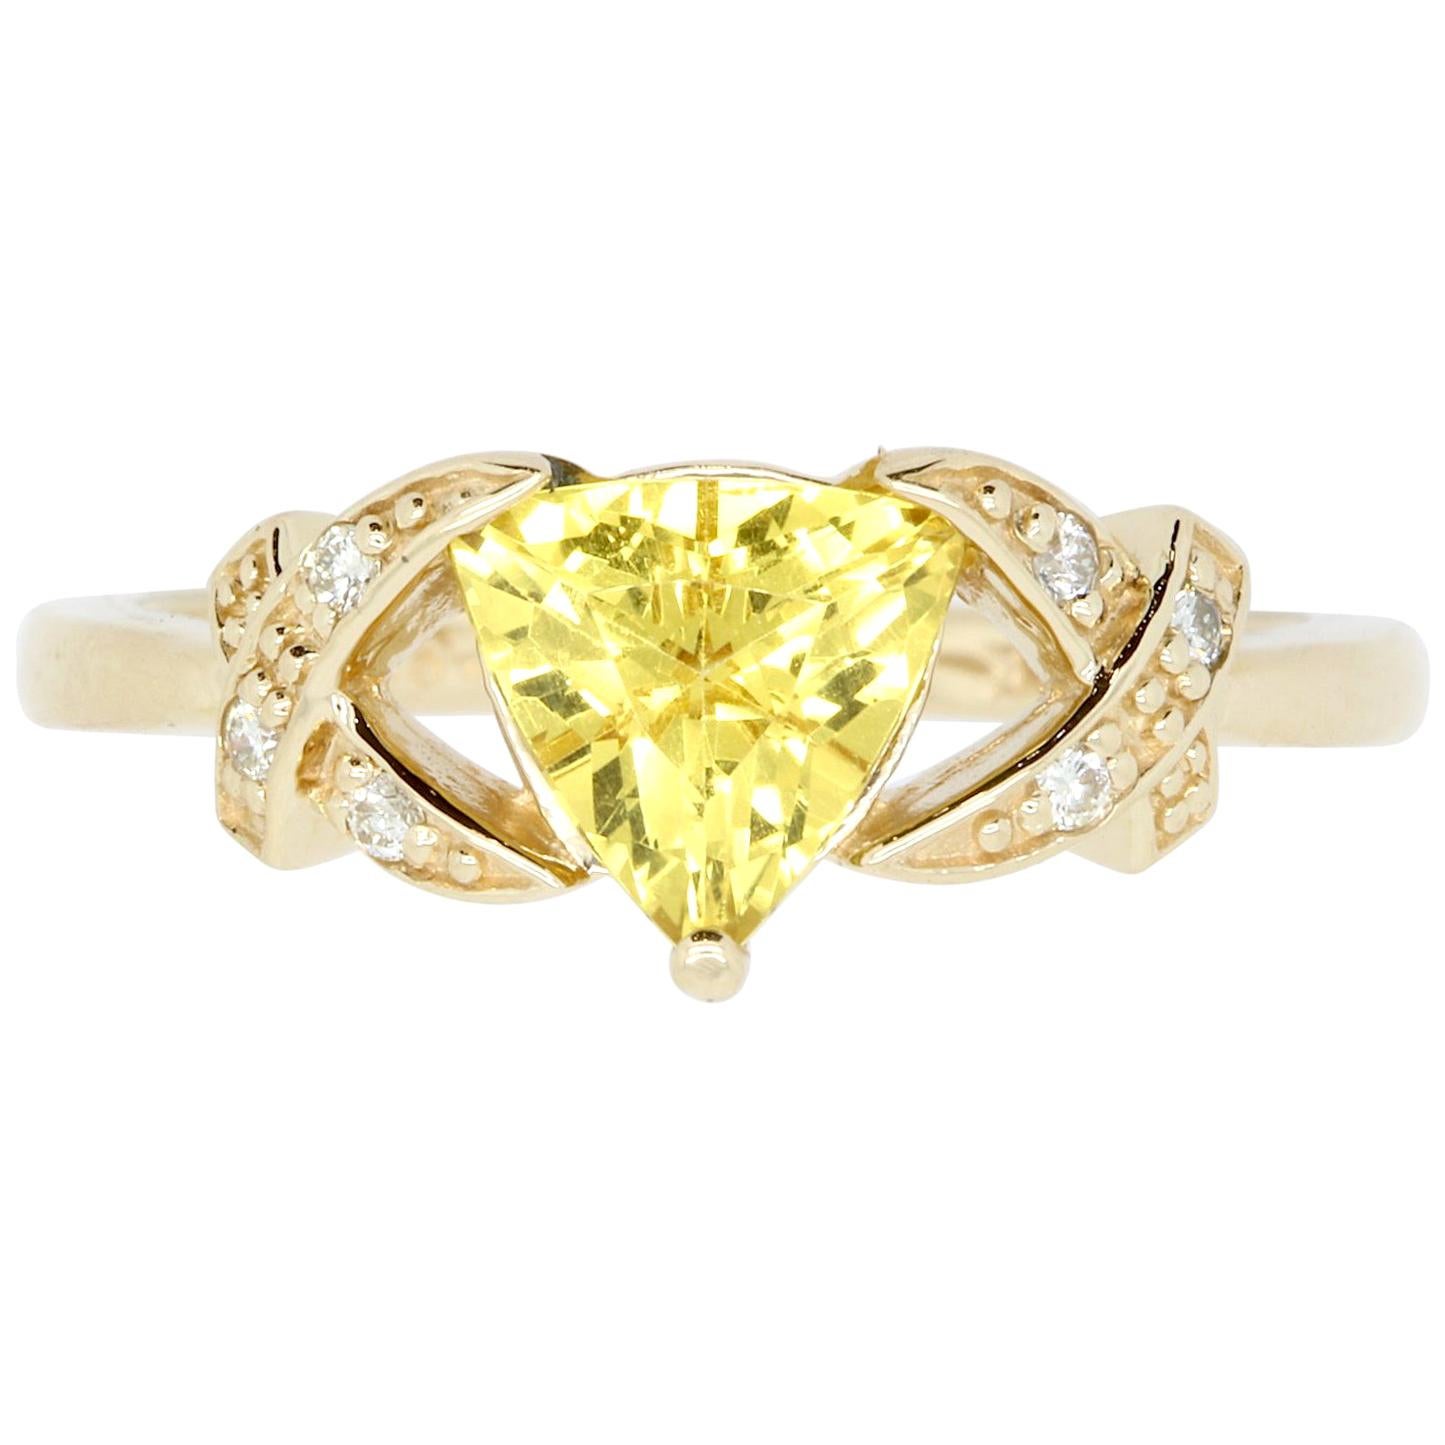 0.86 Carat Trillion Cut Yellow Beryl and White Diamond Ring